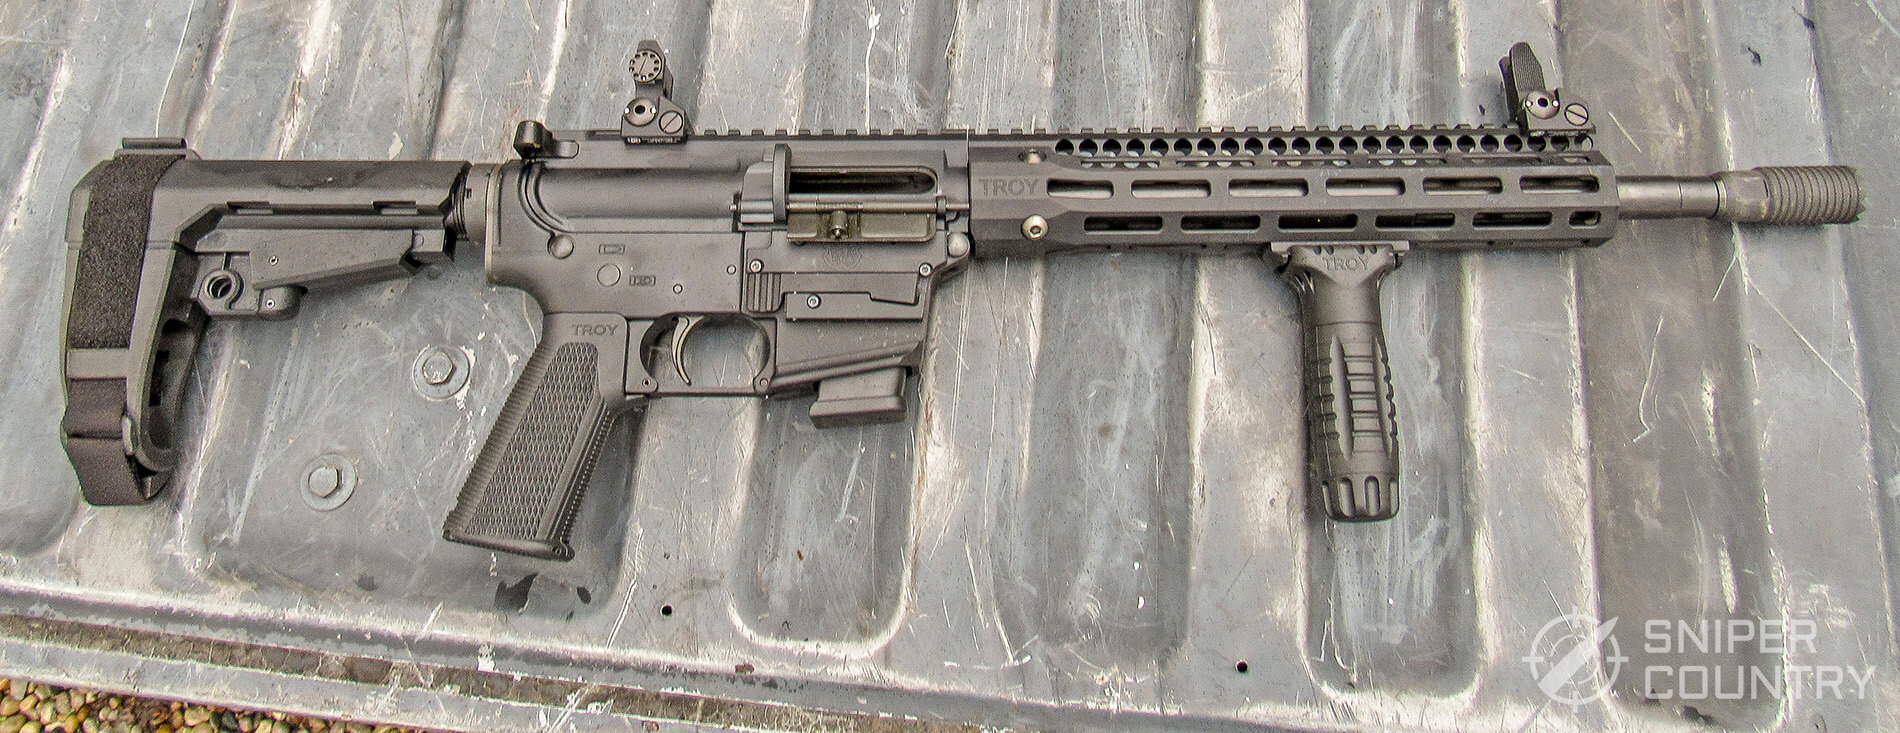 Troy Defense M5 9mm Carbine